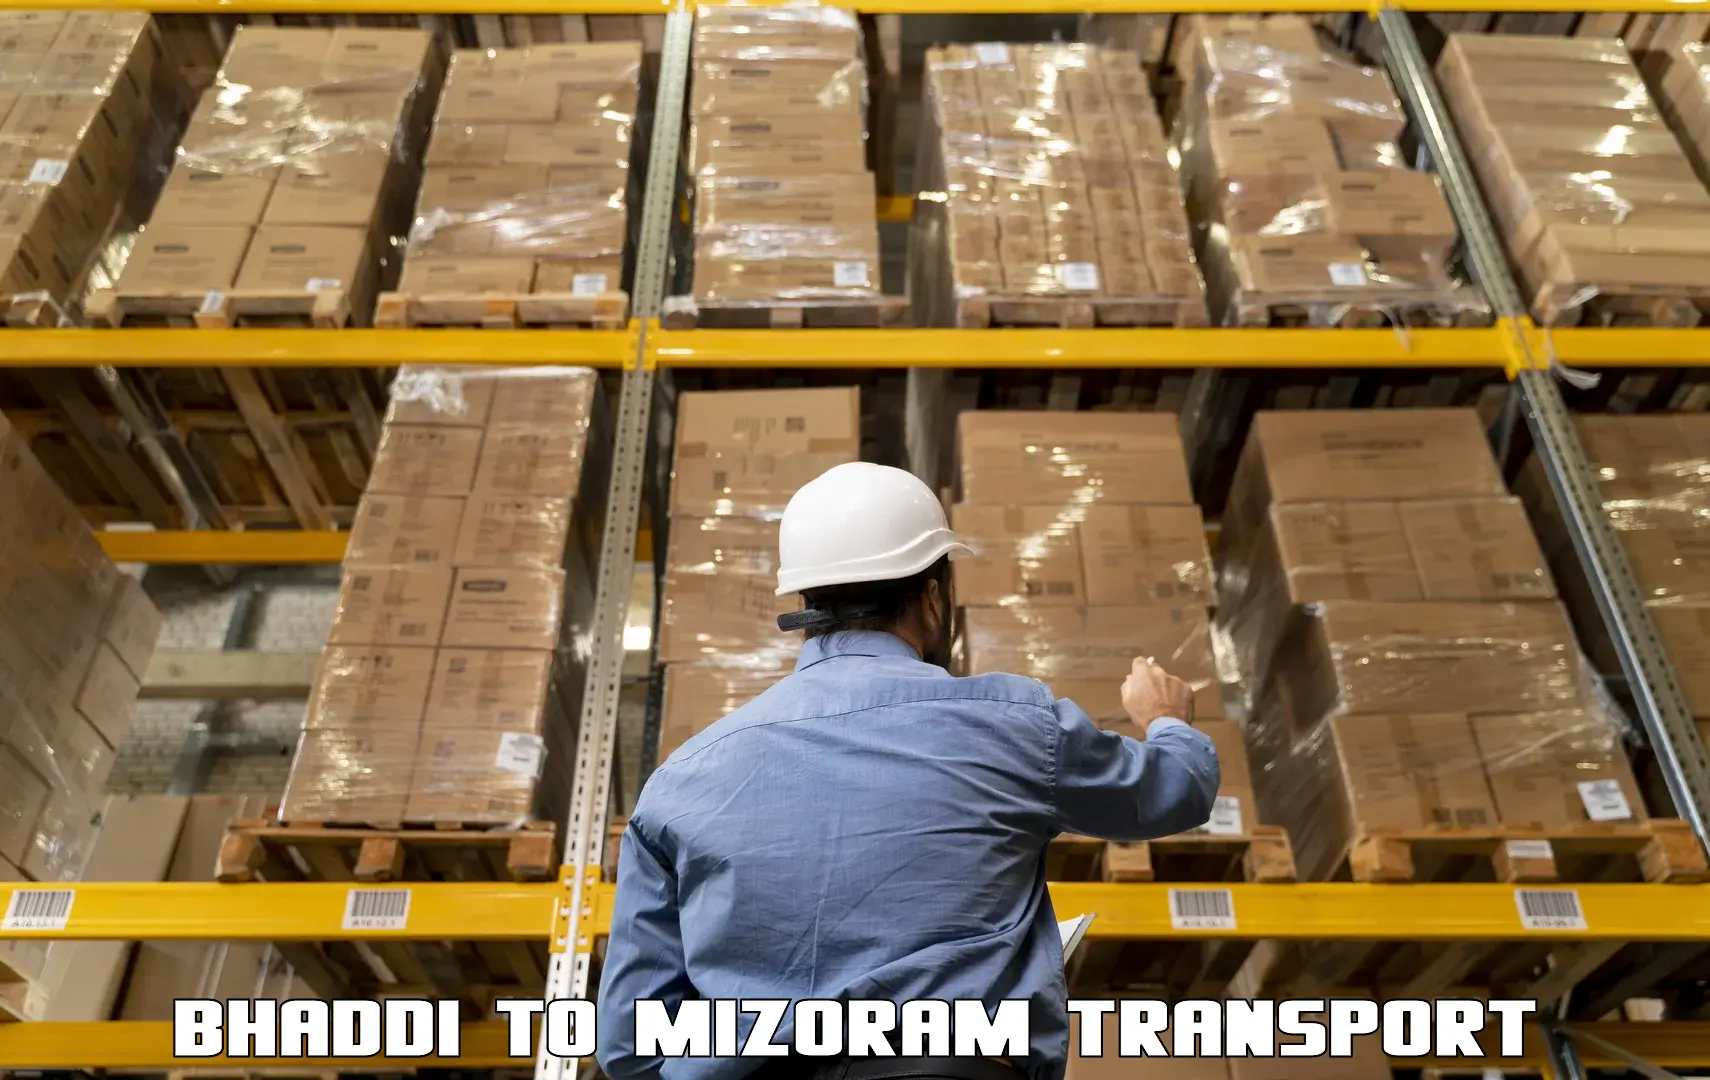 Container transport service Bhaddi to Mizoram